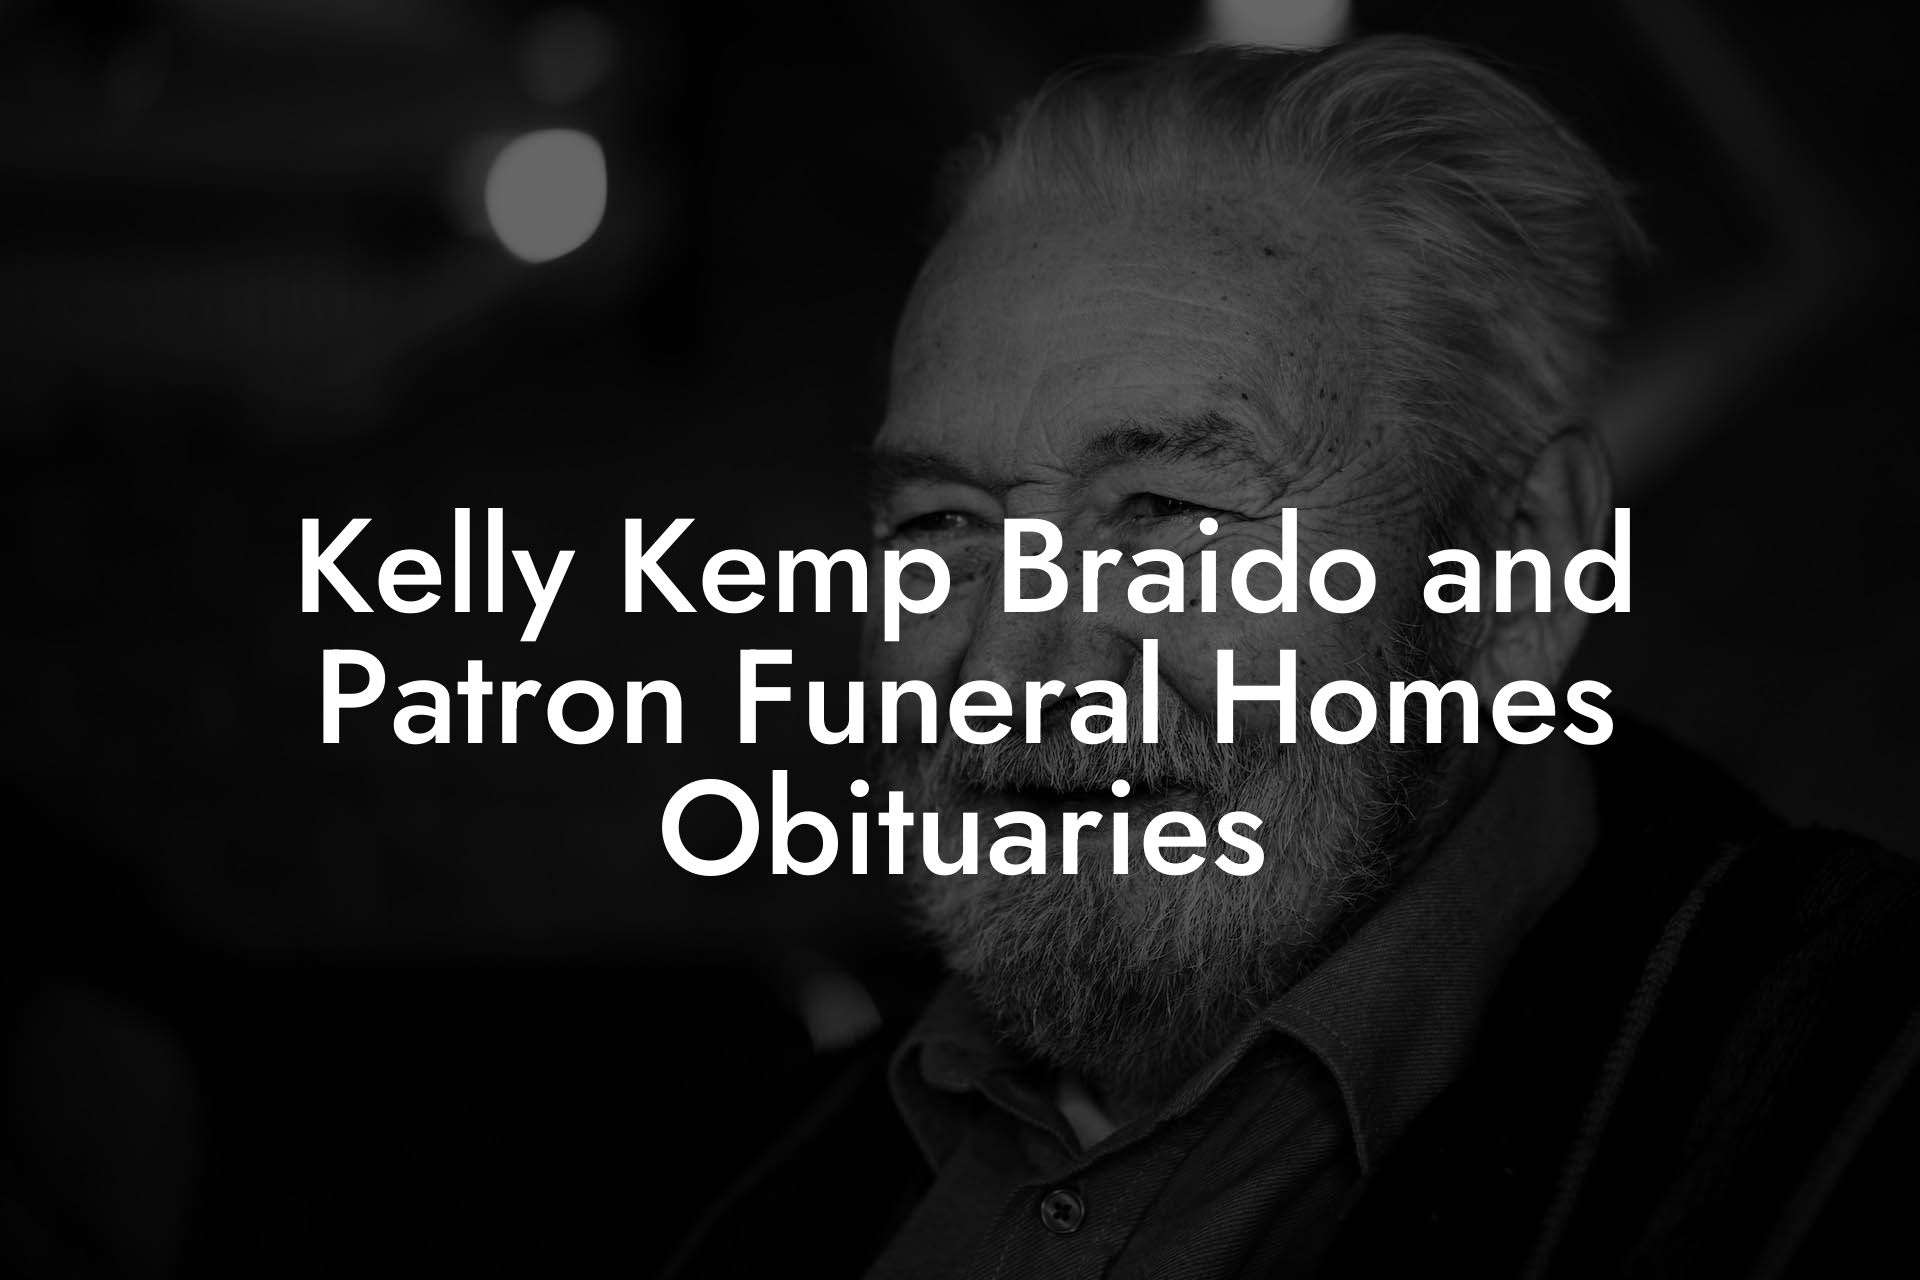 Kelly Kemp Braido and Patron Funeral Homes Obituaries